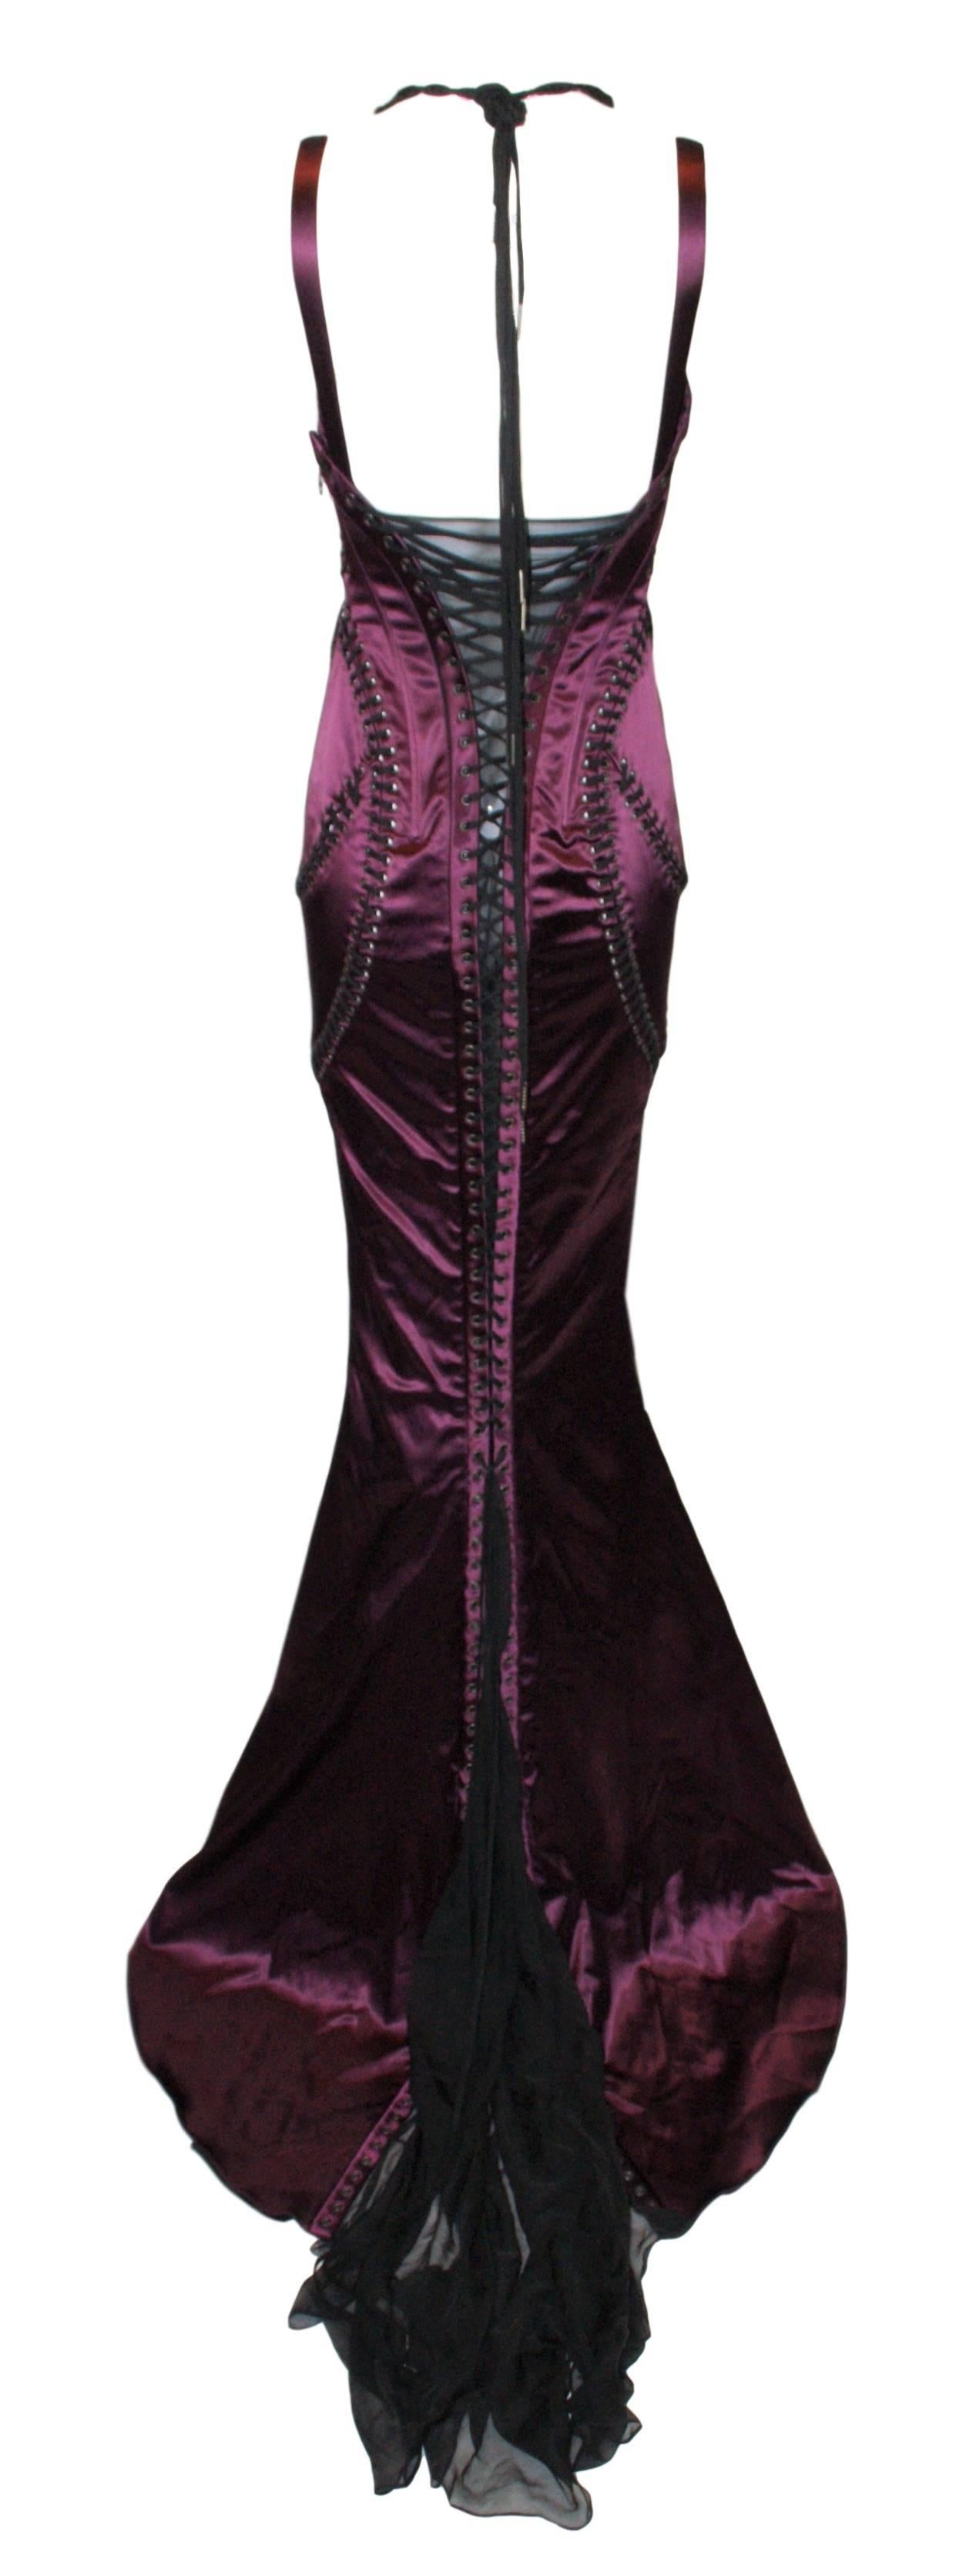 burgandy corset dress